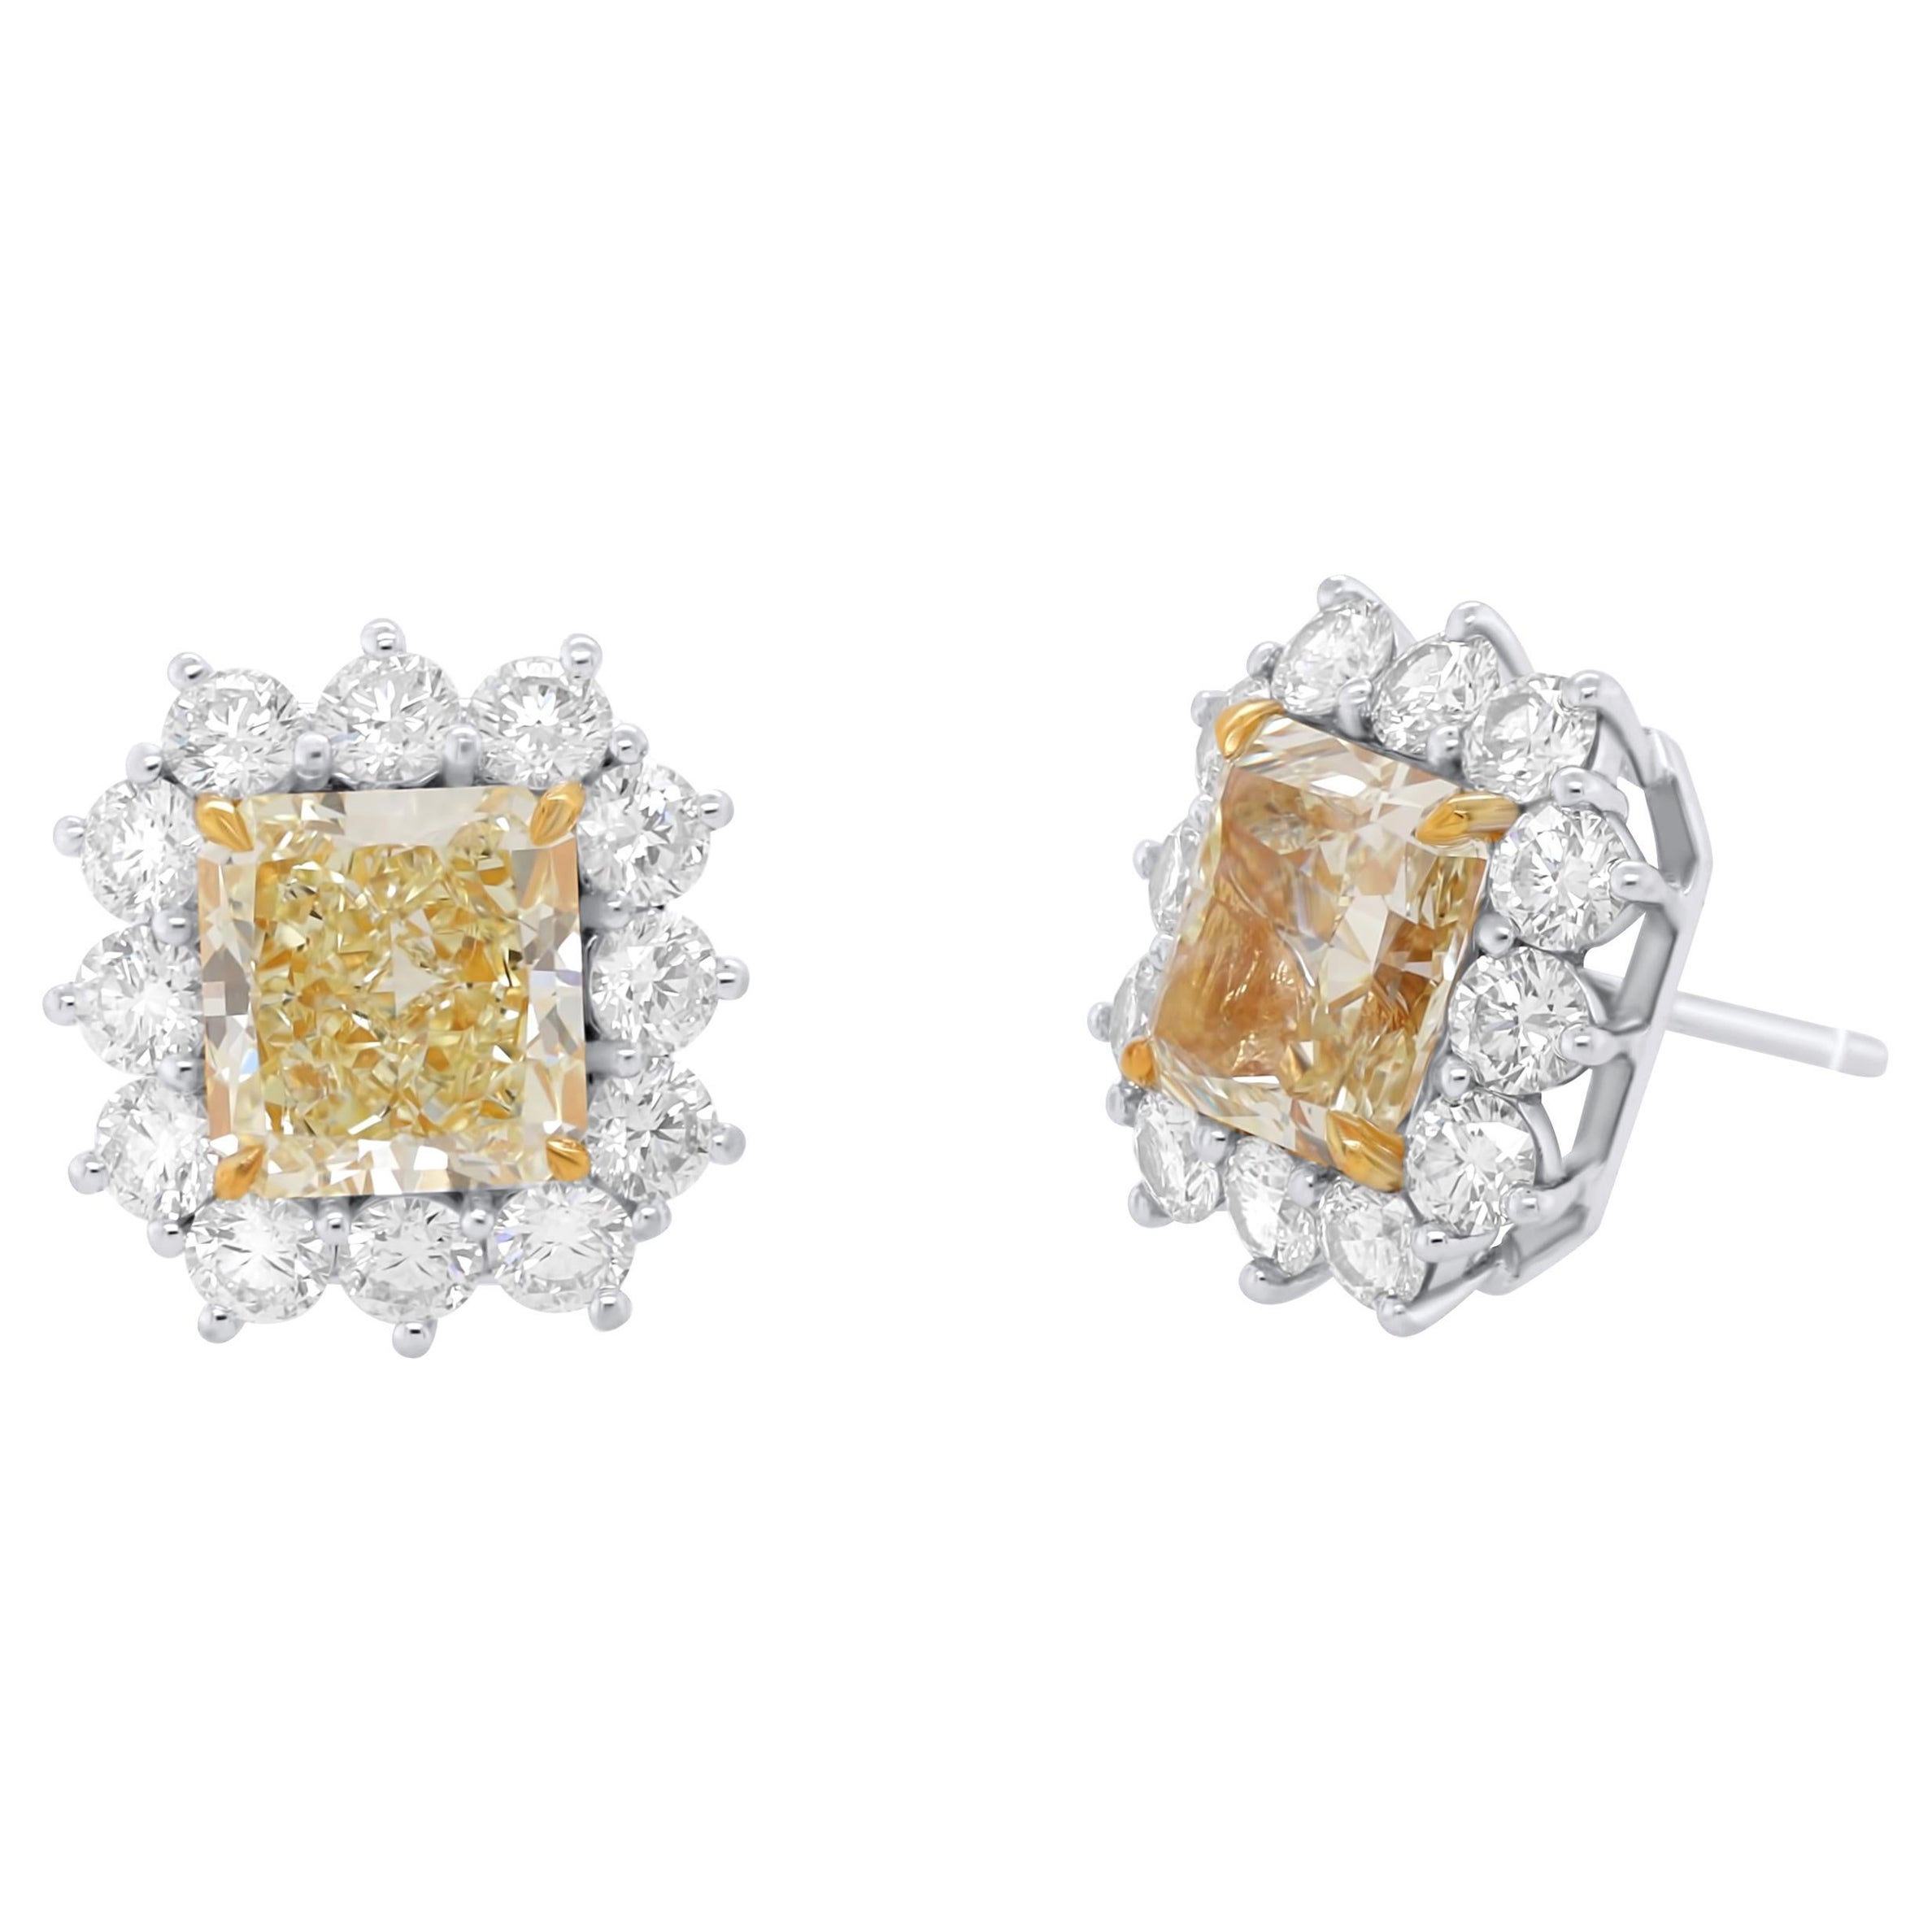 Diana M. yellow diamond Stud Earrings 6.79ct yellow Diamonds 3ct of halo